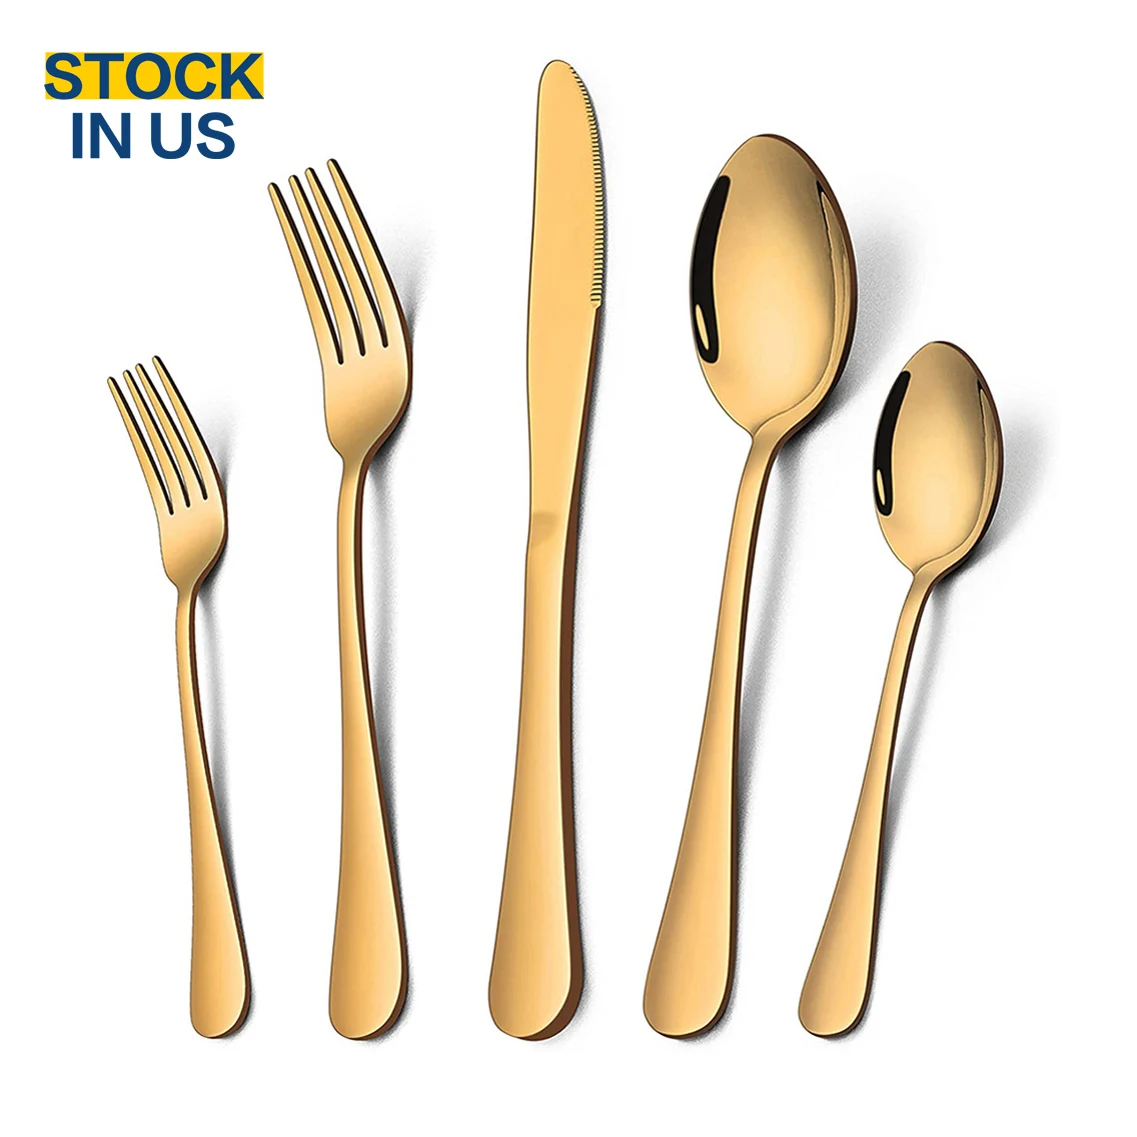 

US STOCKS bulk nordic stainless steel luxury wedding gold plated cutlery flatware silverware set, Silver, black, rose gold, gold